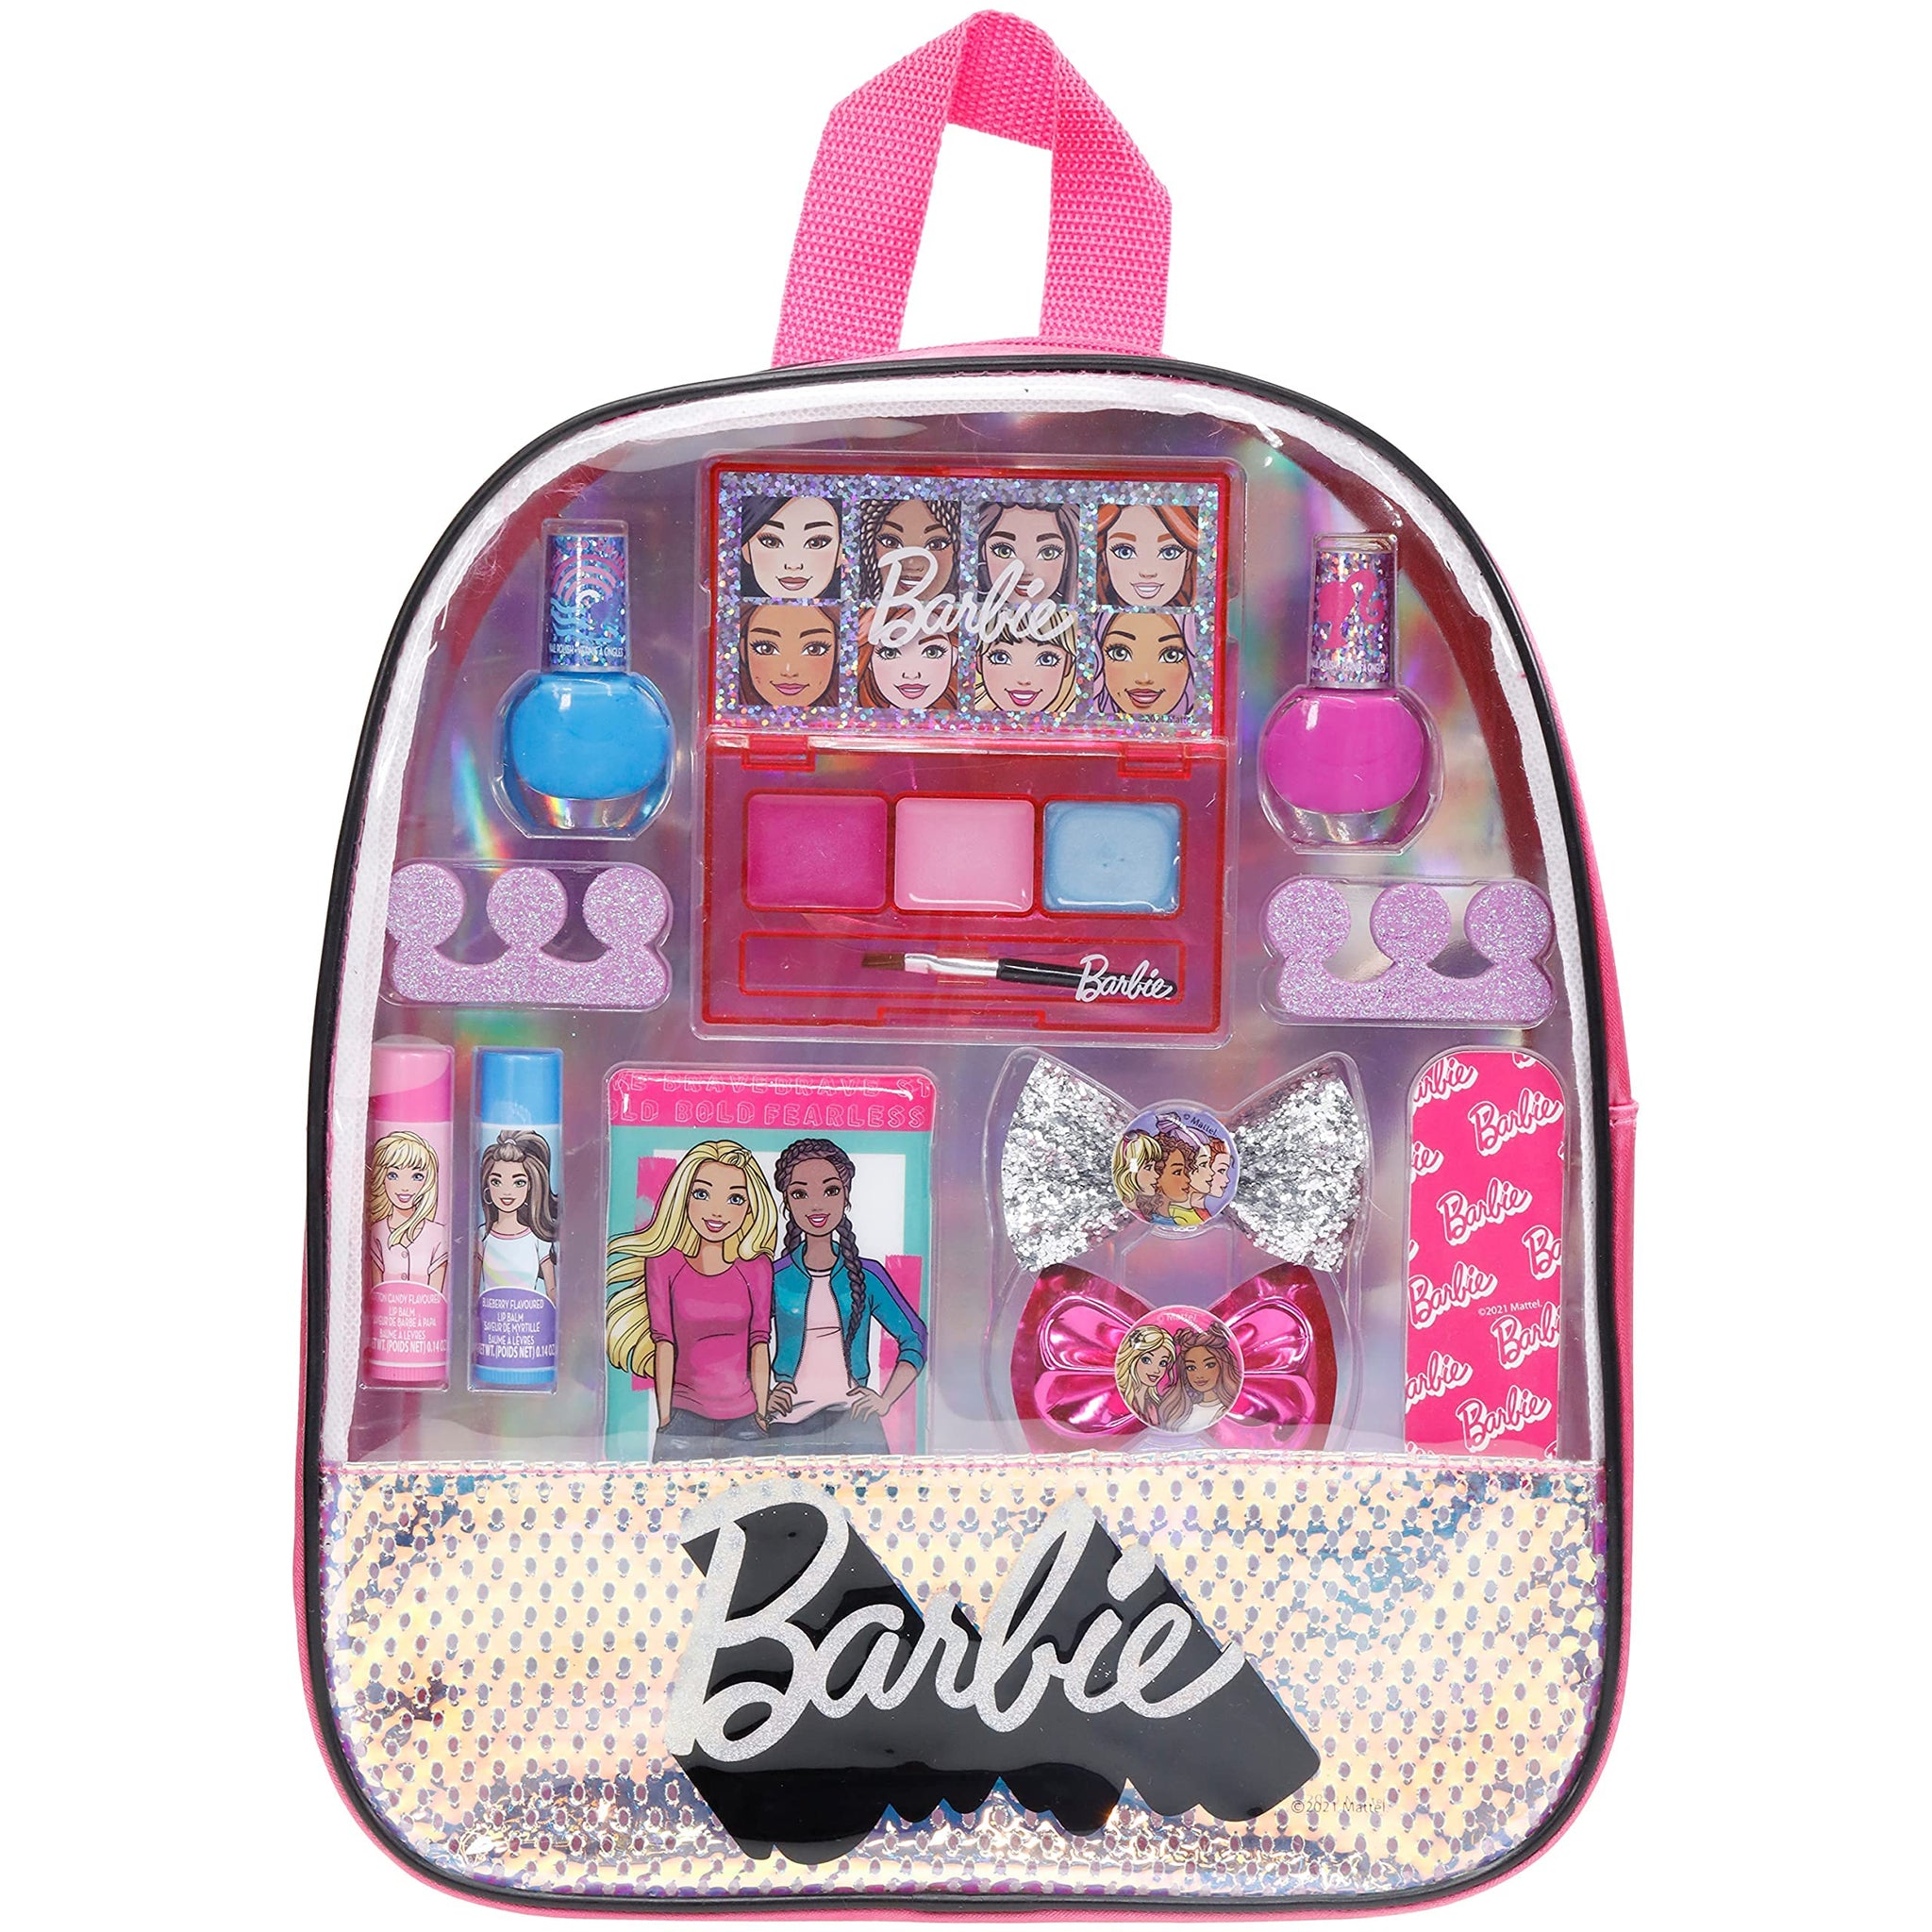 Barbie Sweet Shop Lip Gloss Kit